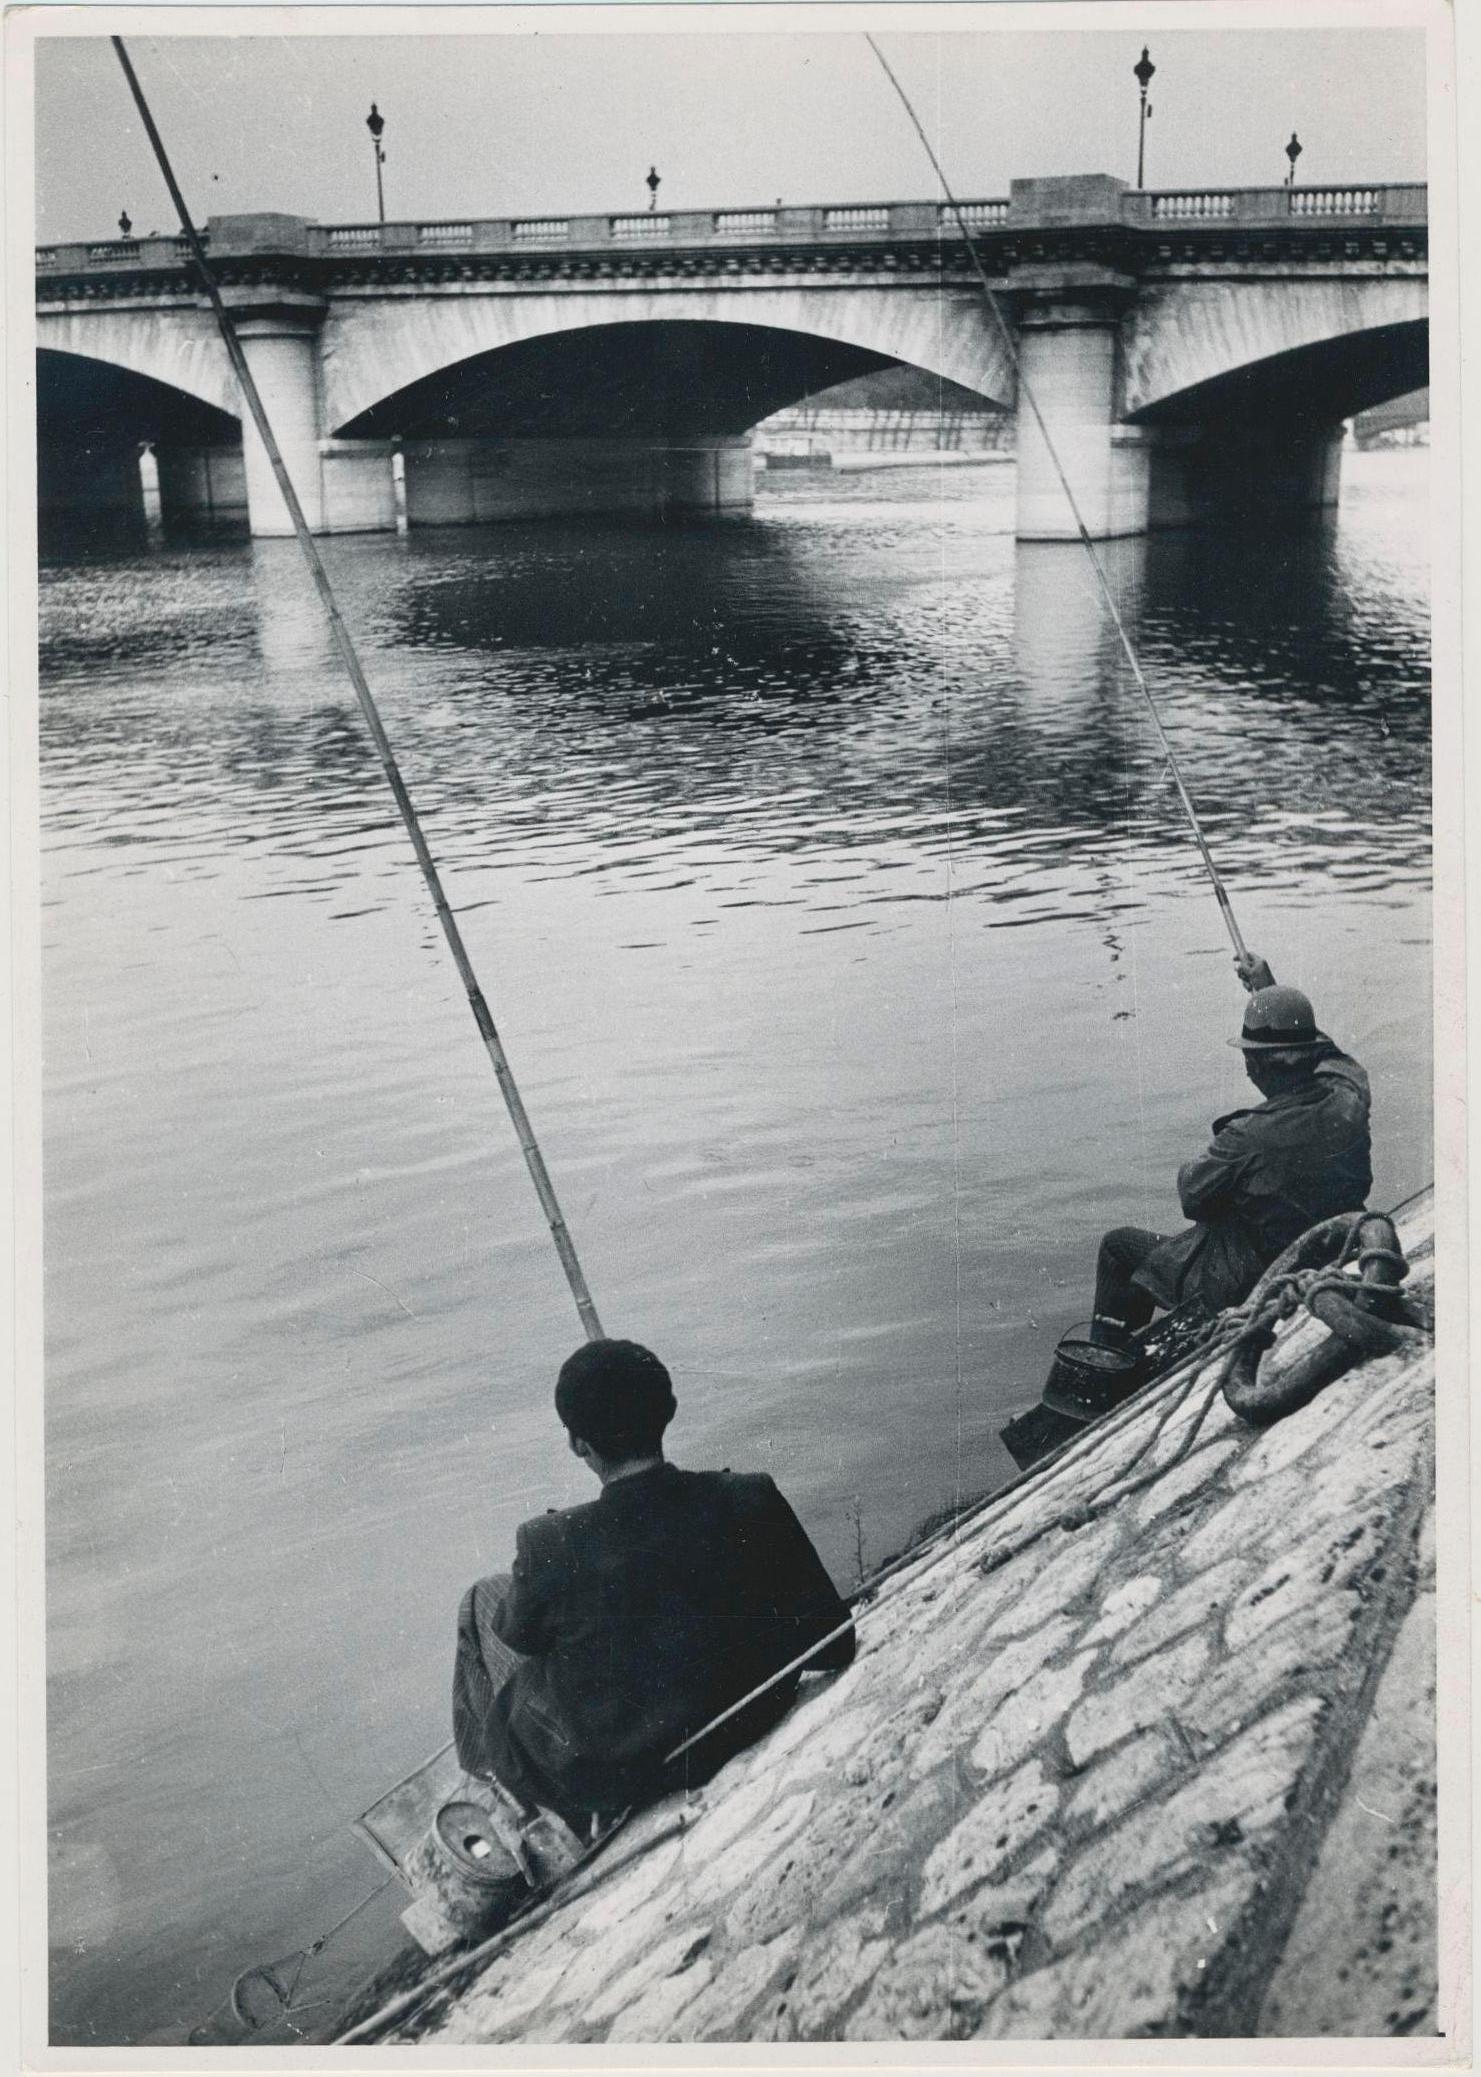 Fishermen; Street Photography; Black and White; Paris, 1950s, 17, 5 x 12, 4 cm